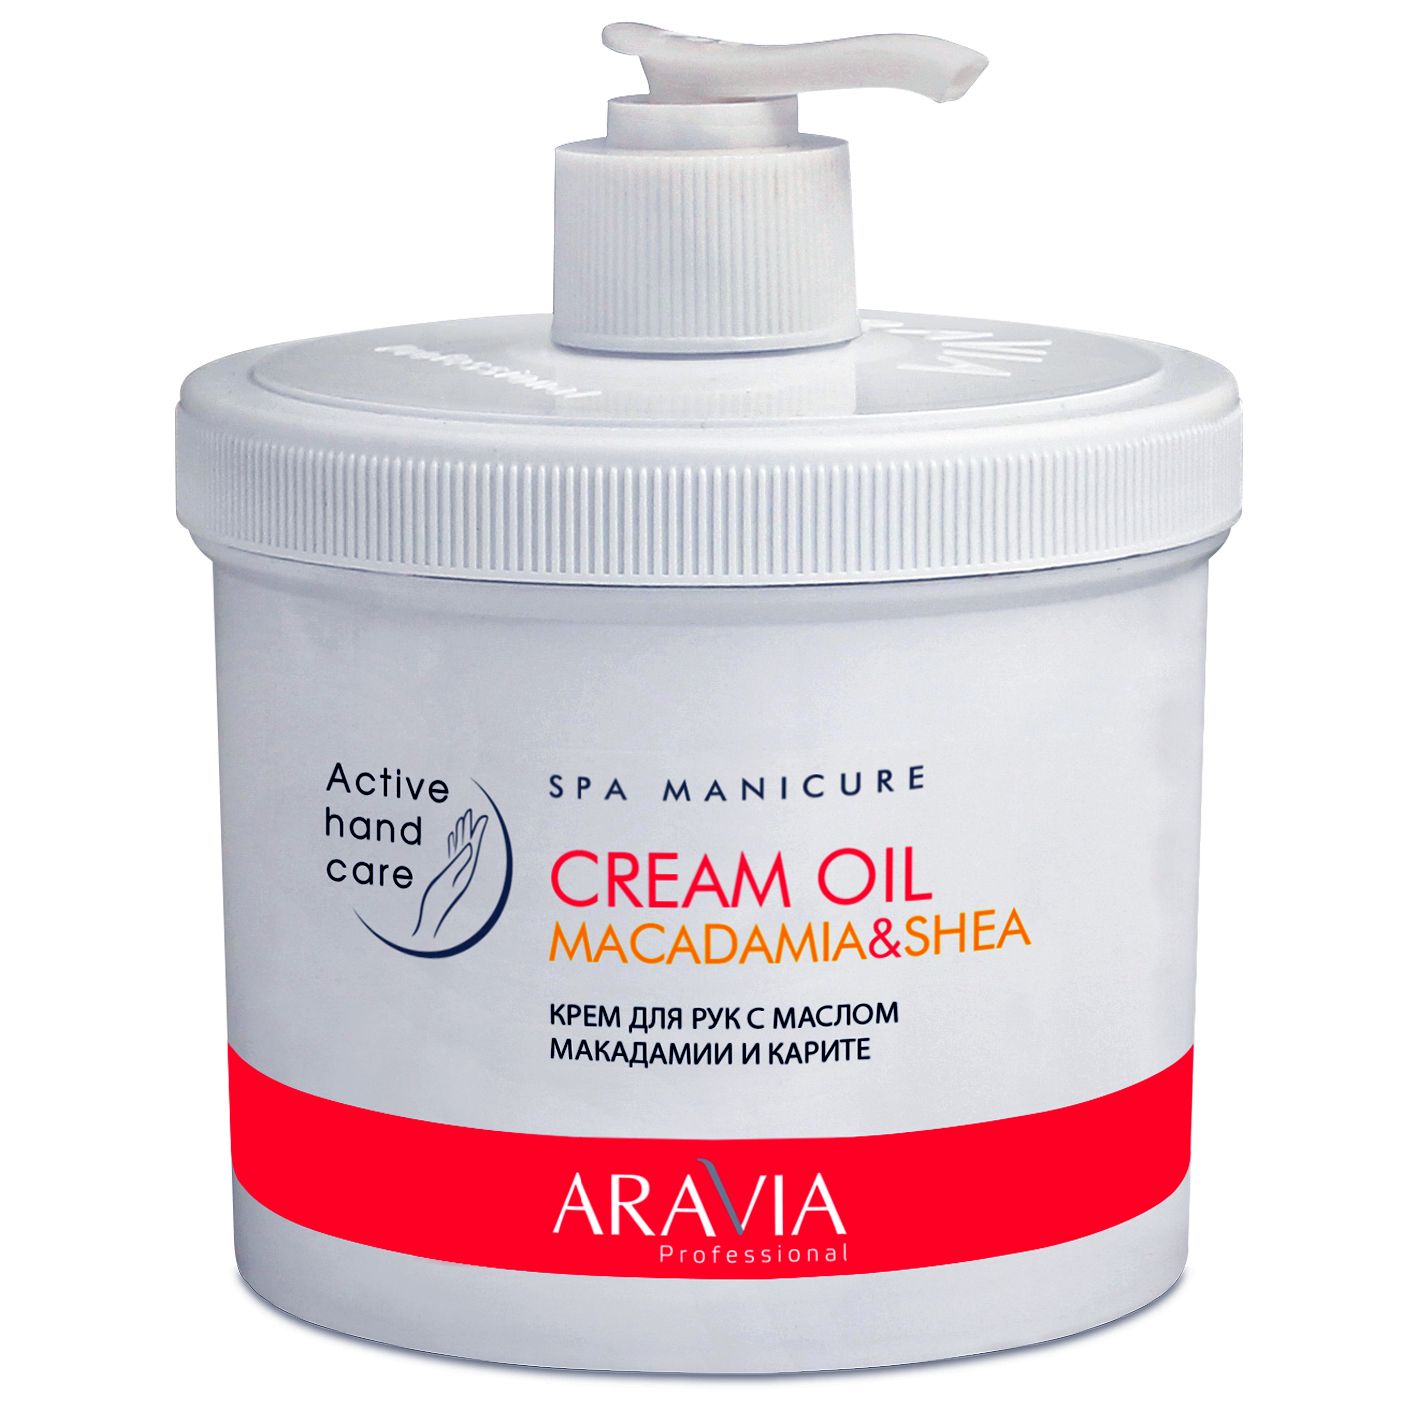 Aravia крем для рук с маслом макадамии и карите cream oil 550мл (р)